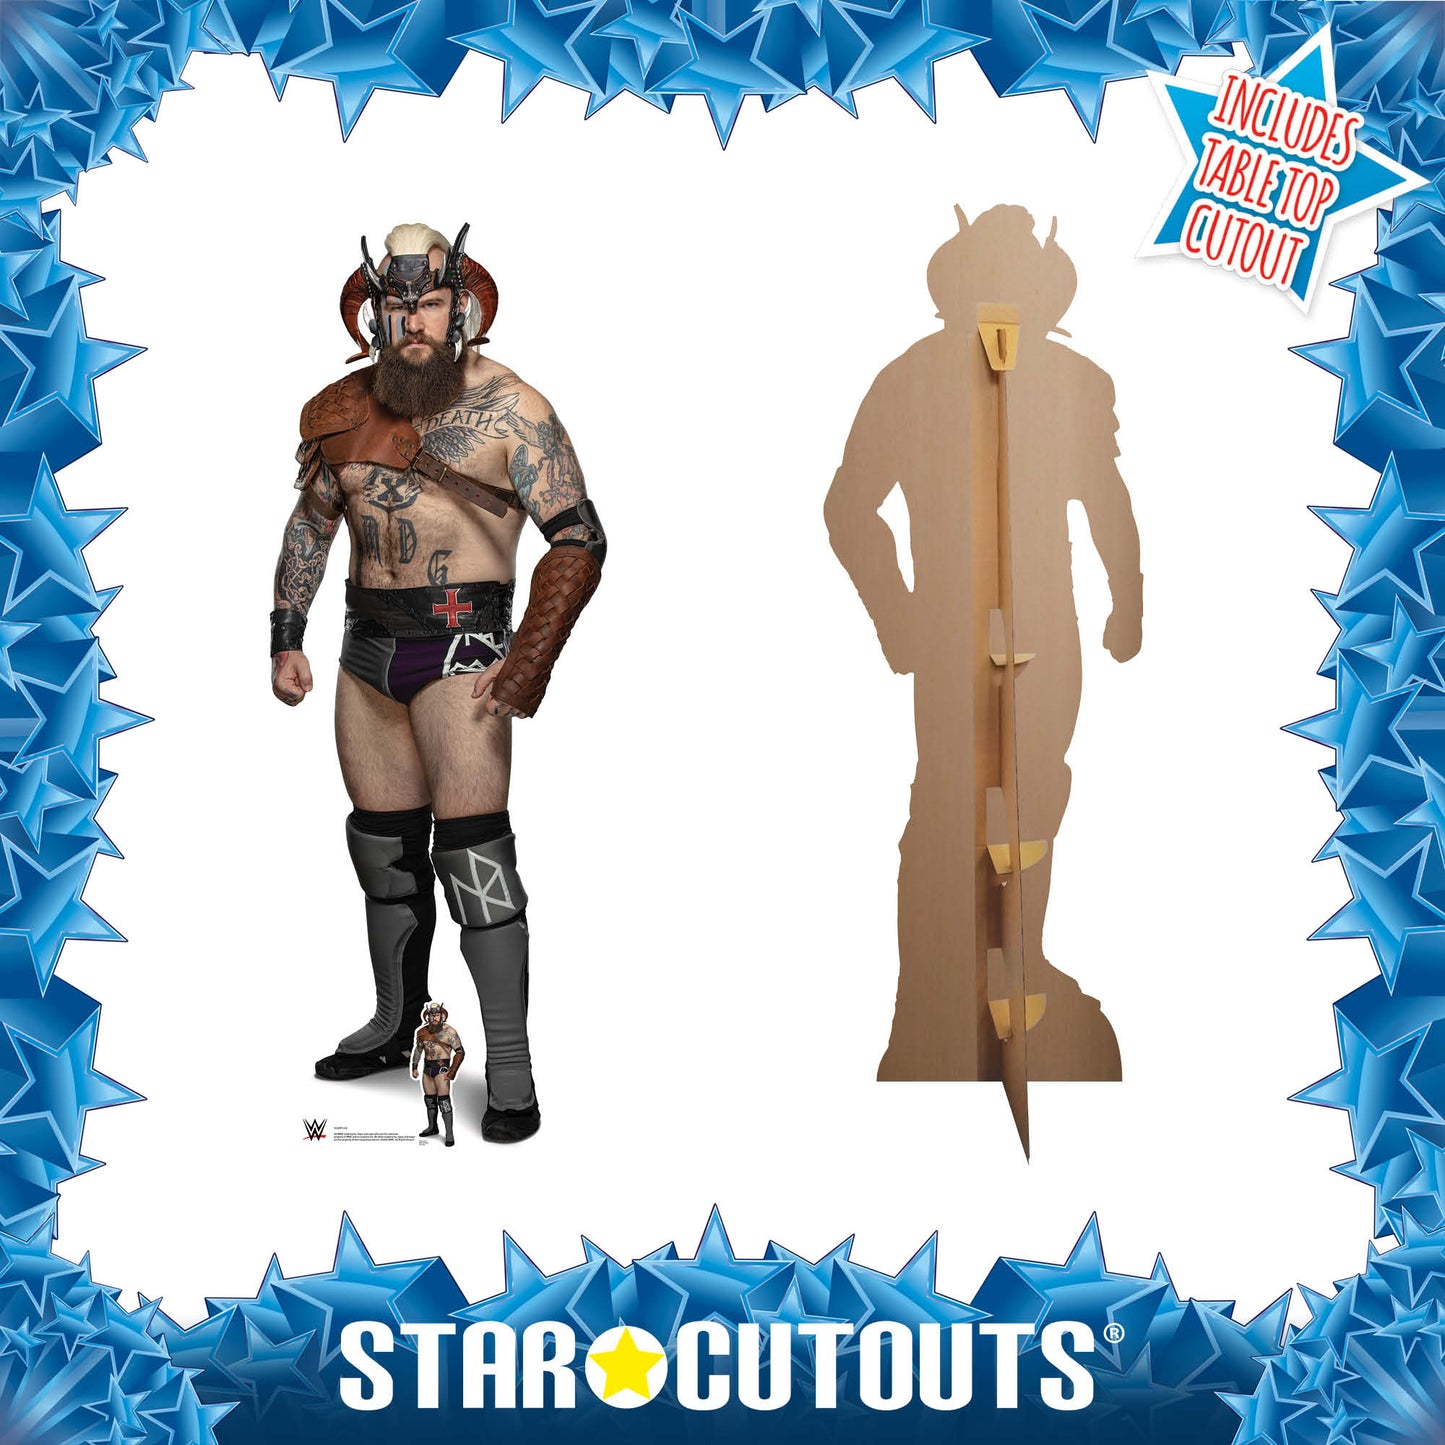 Erik WWE Cardboard Cutout Lifesize